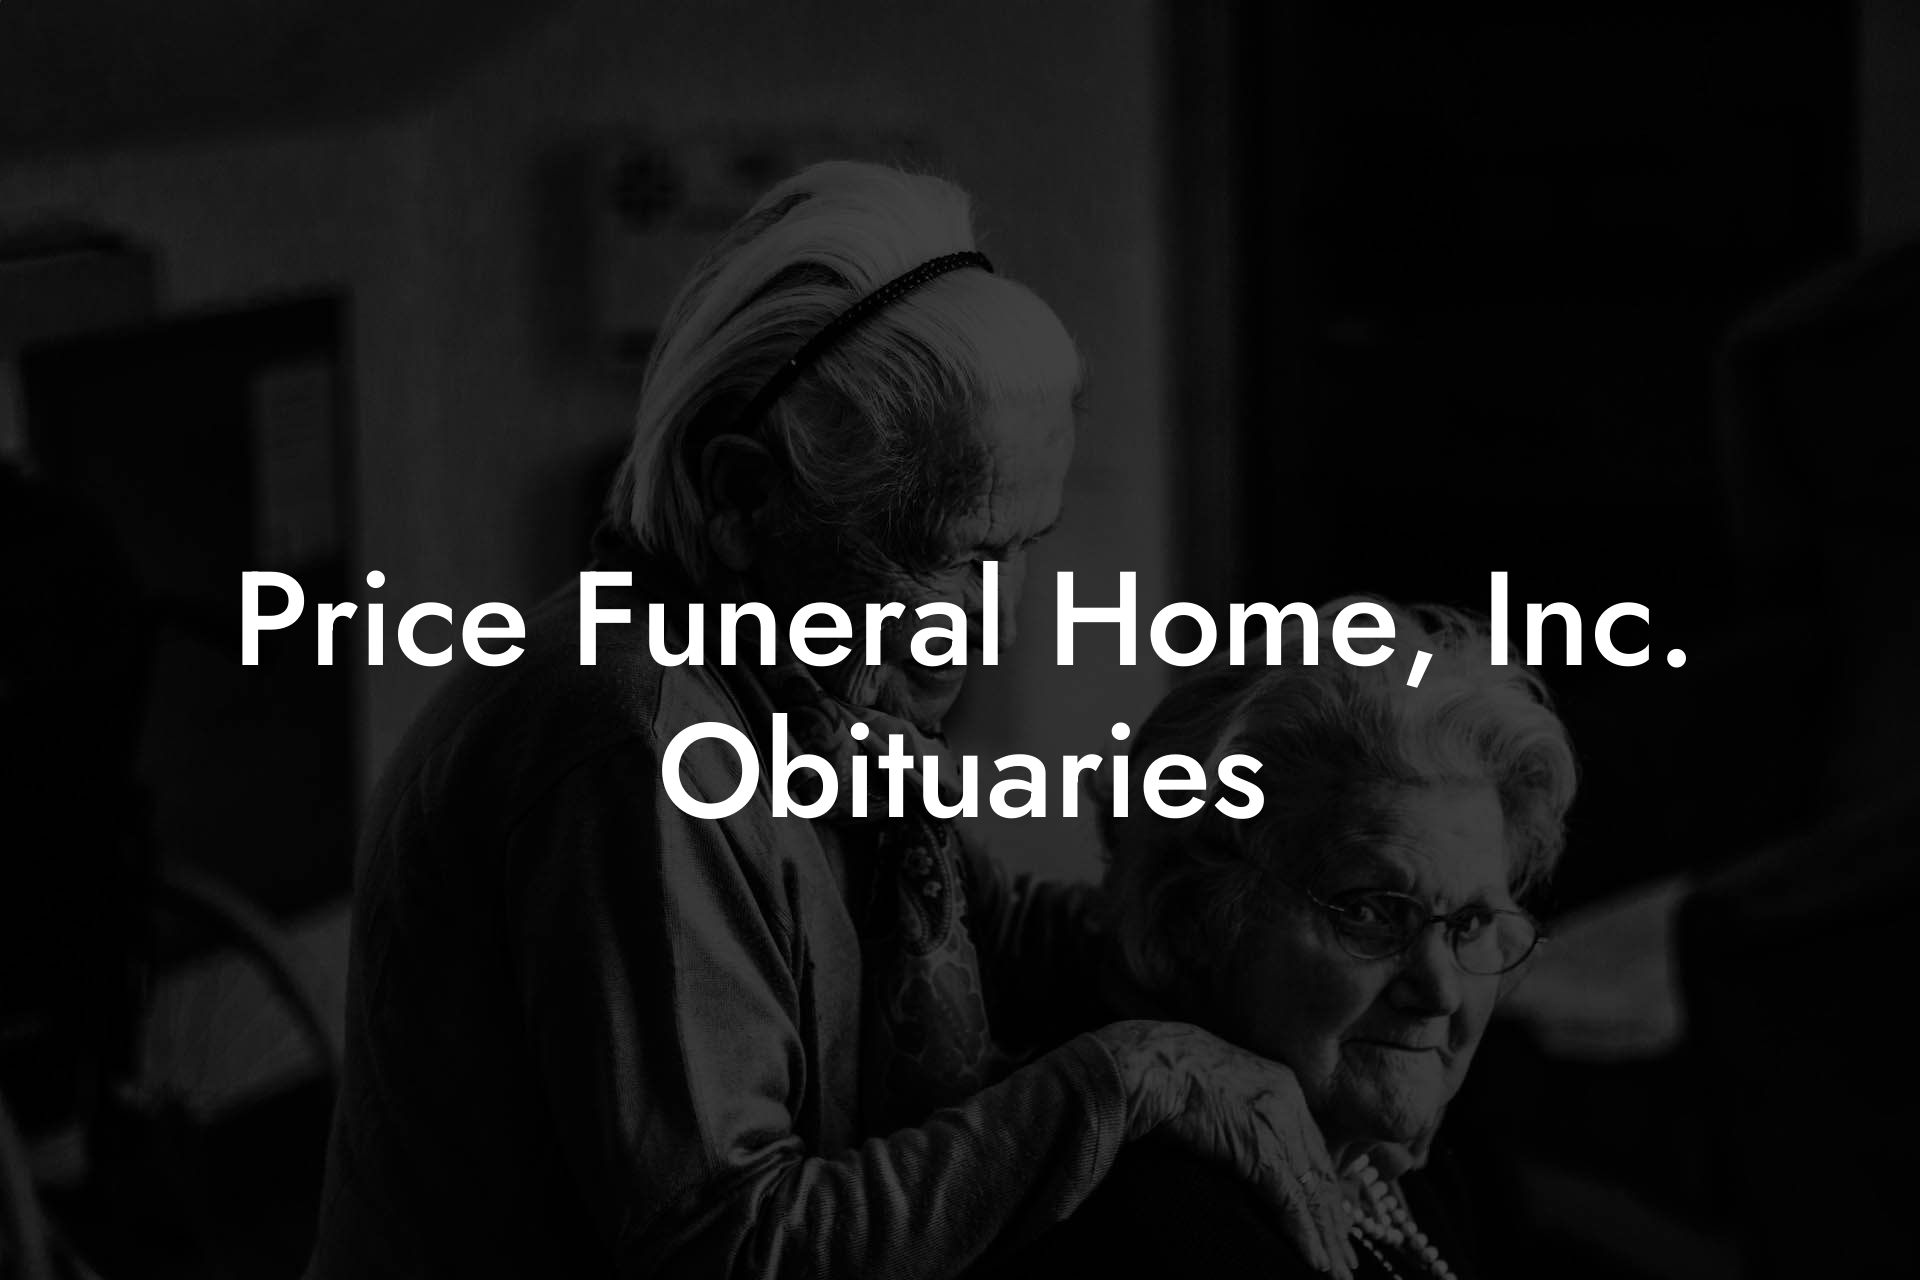 Price Funeral Home, Inc. Obituaries